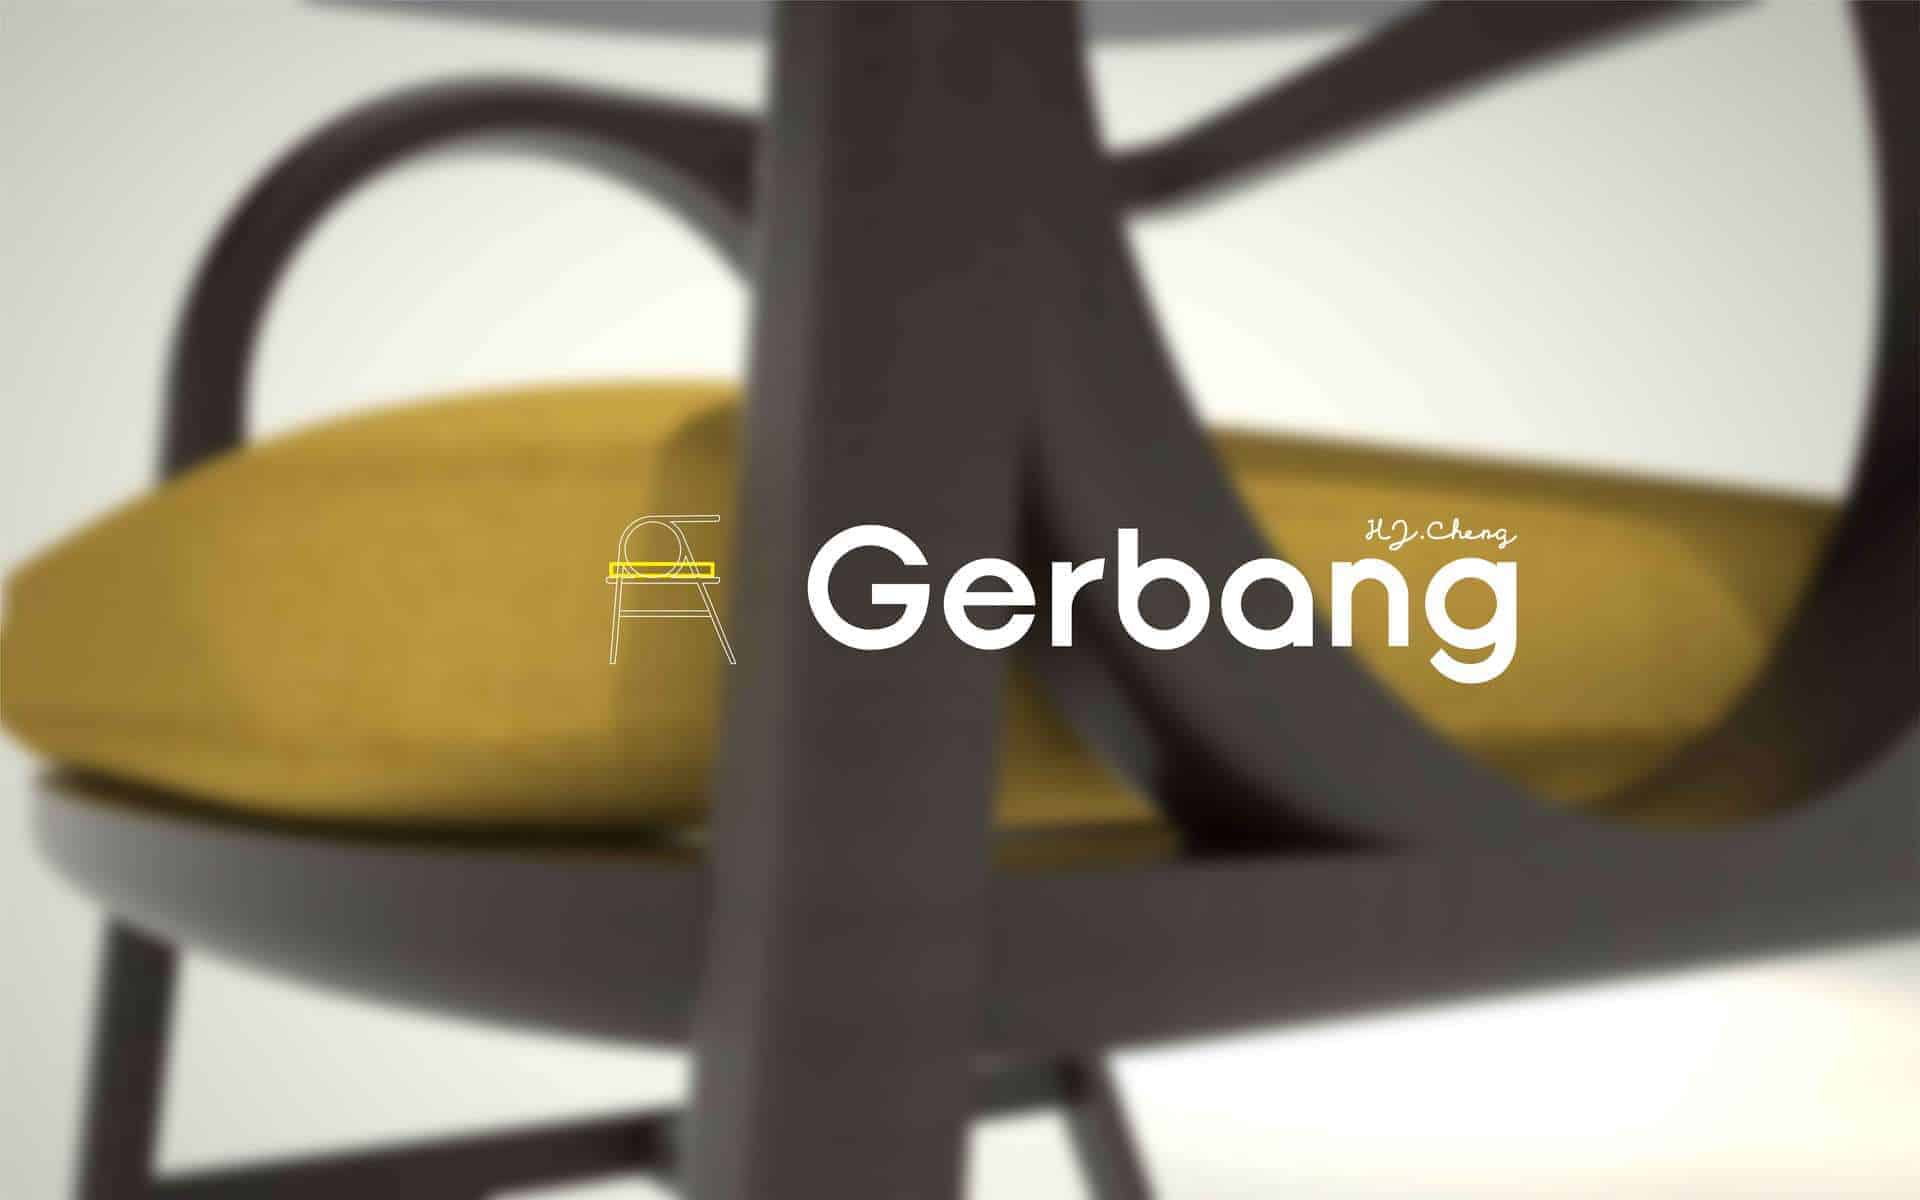 Gerbang - Lounge Chair